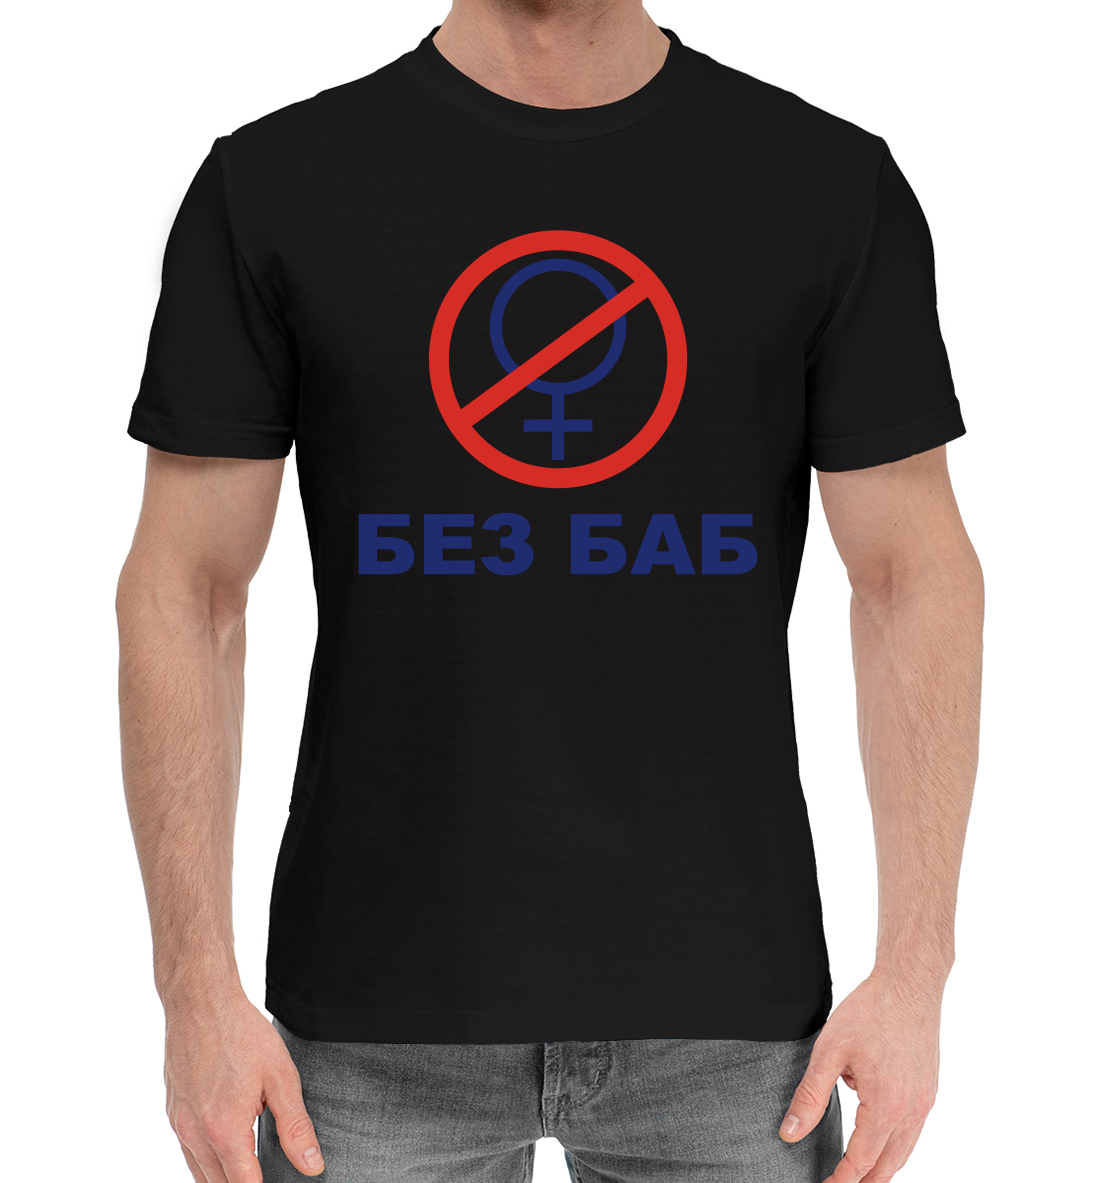 Мужская Хлопковая футболка с надписью БЕЗ БАБ, артикул NDP-949295-hfu-2mp